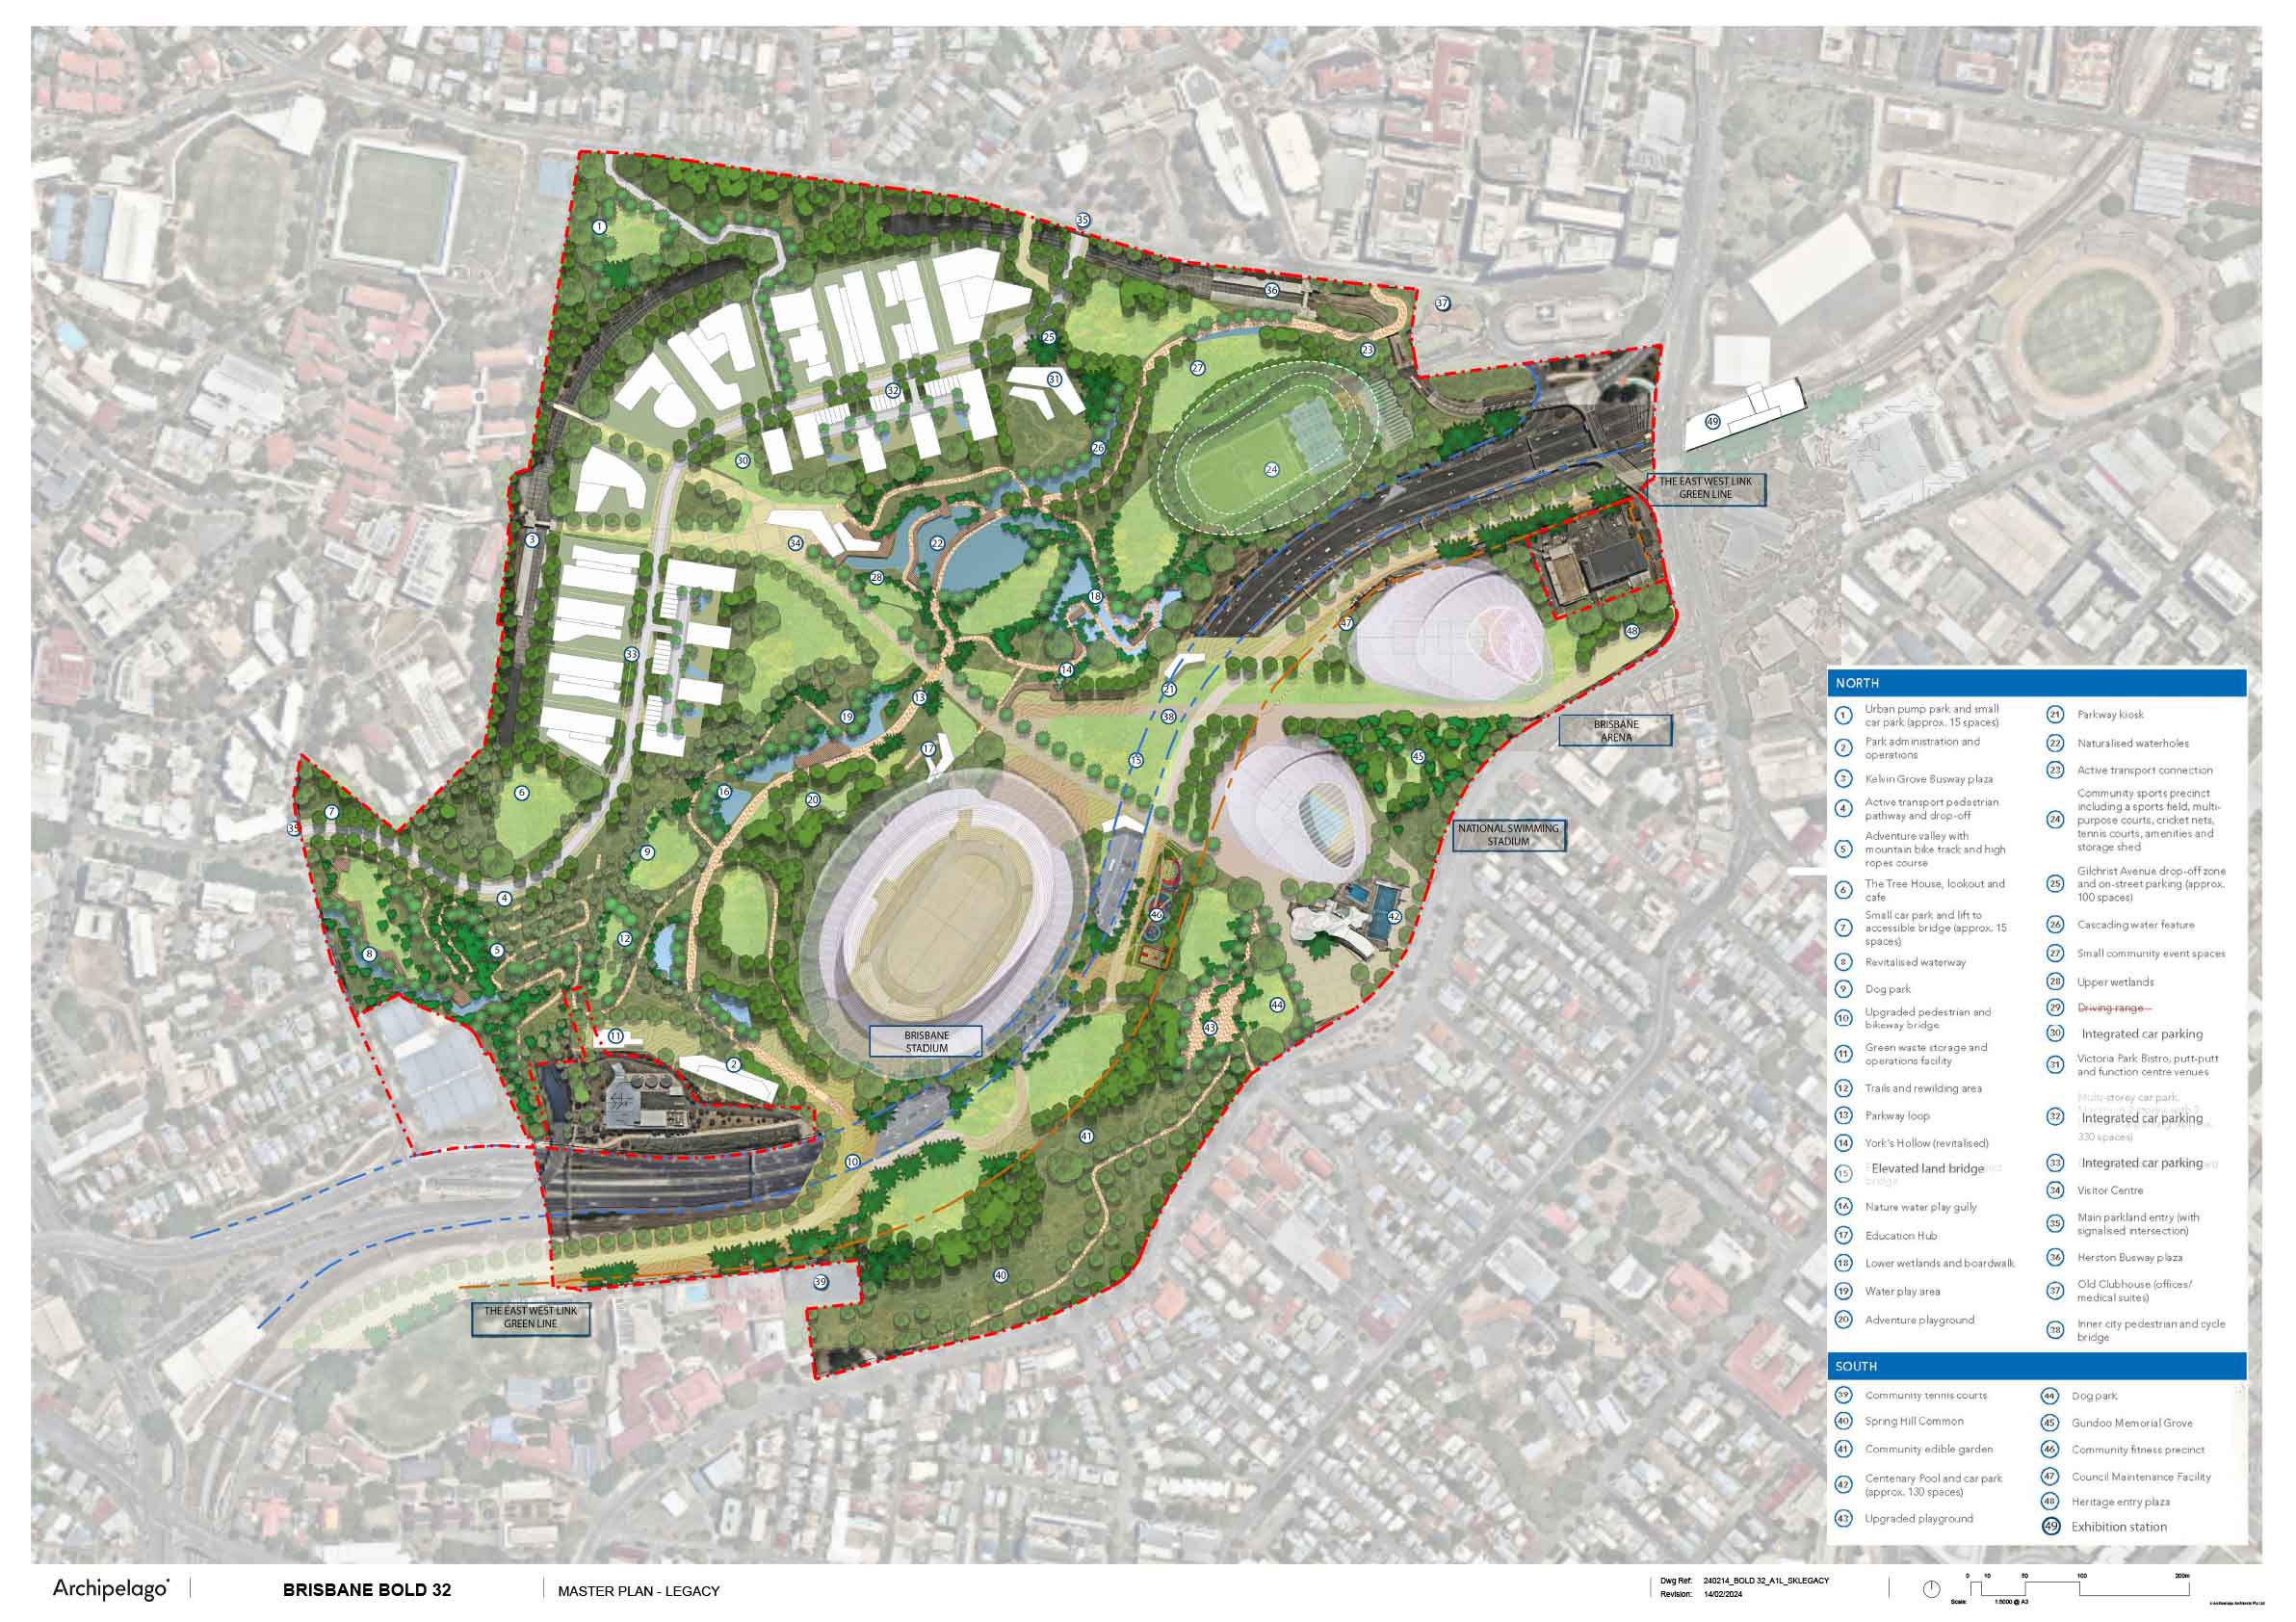 Archipelago's Bold 32 Victoria Park Master Plan